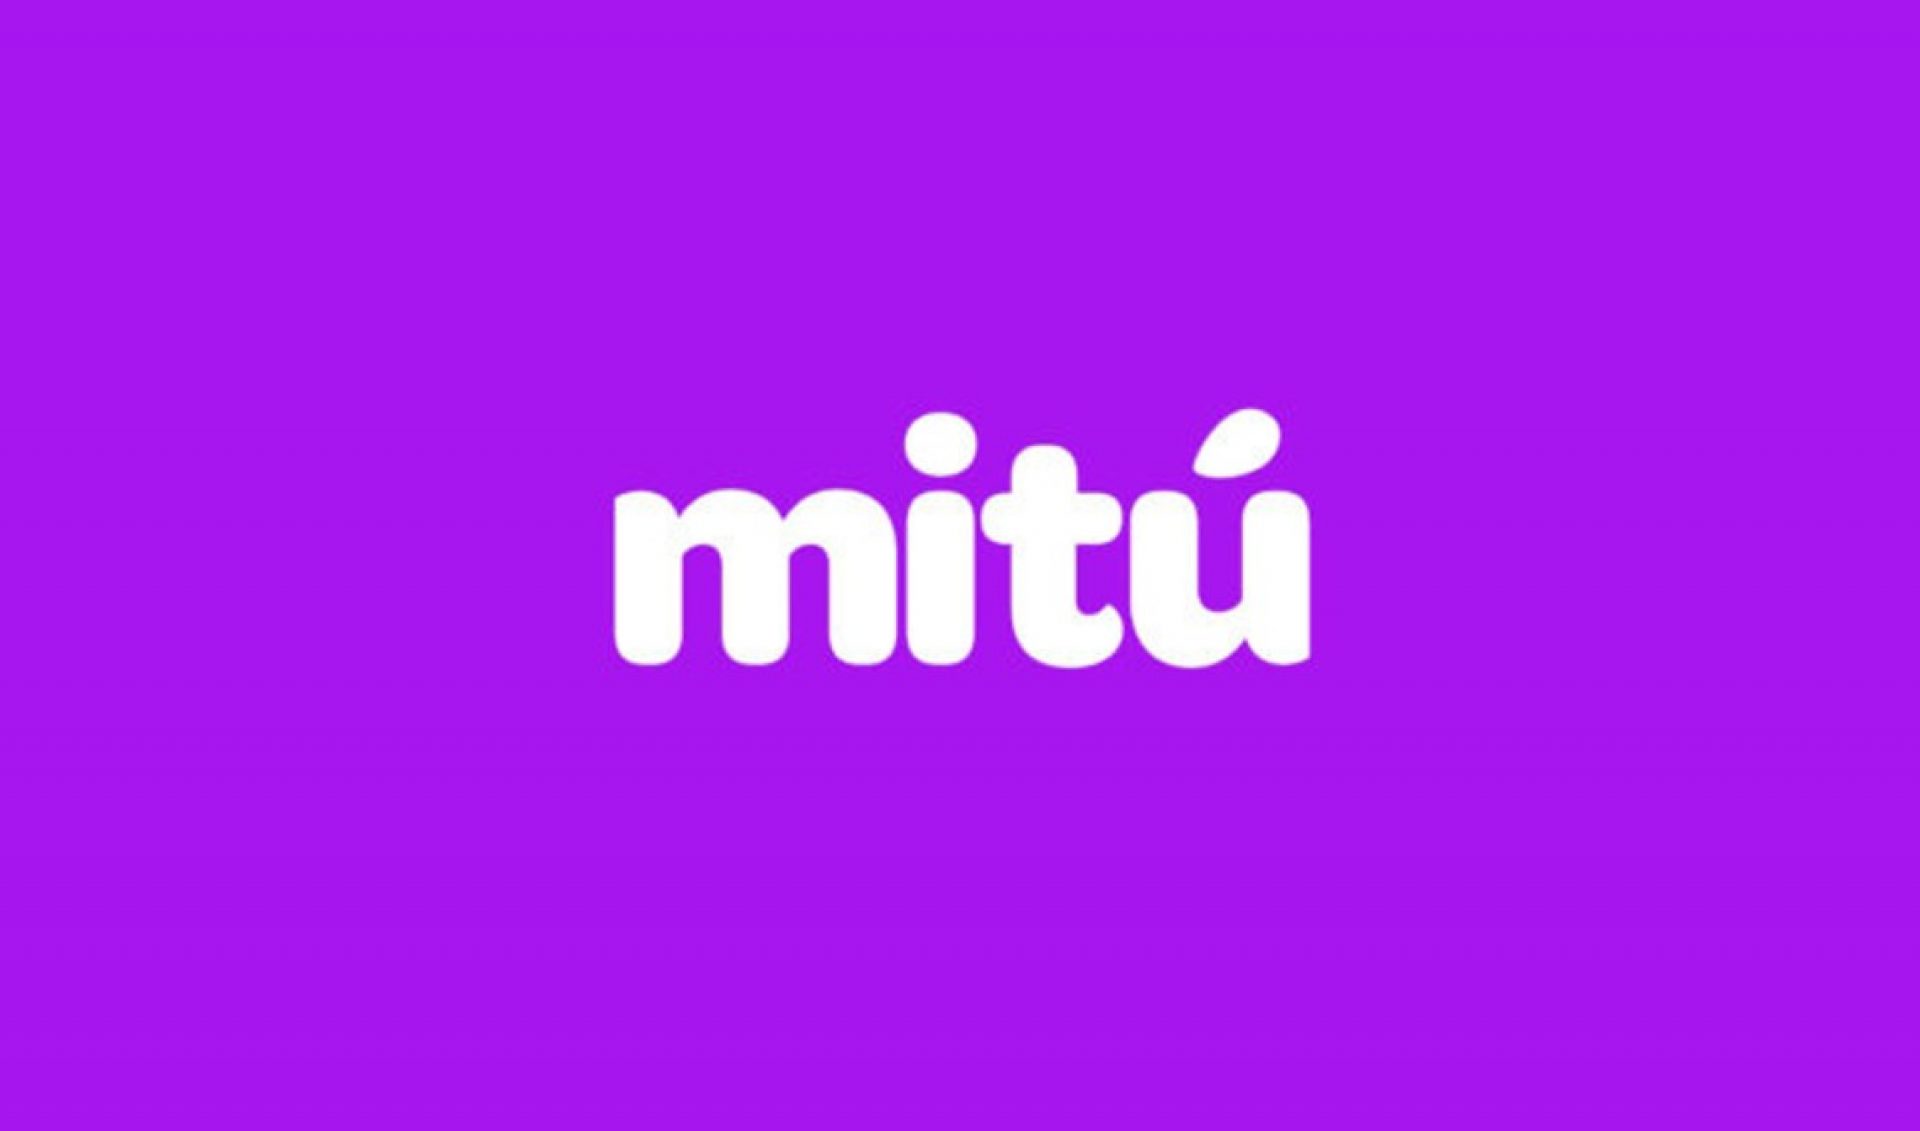 Mitú Acquired By Fellow LatinX Digital Media Purveyor Latido Networks